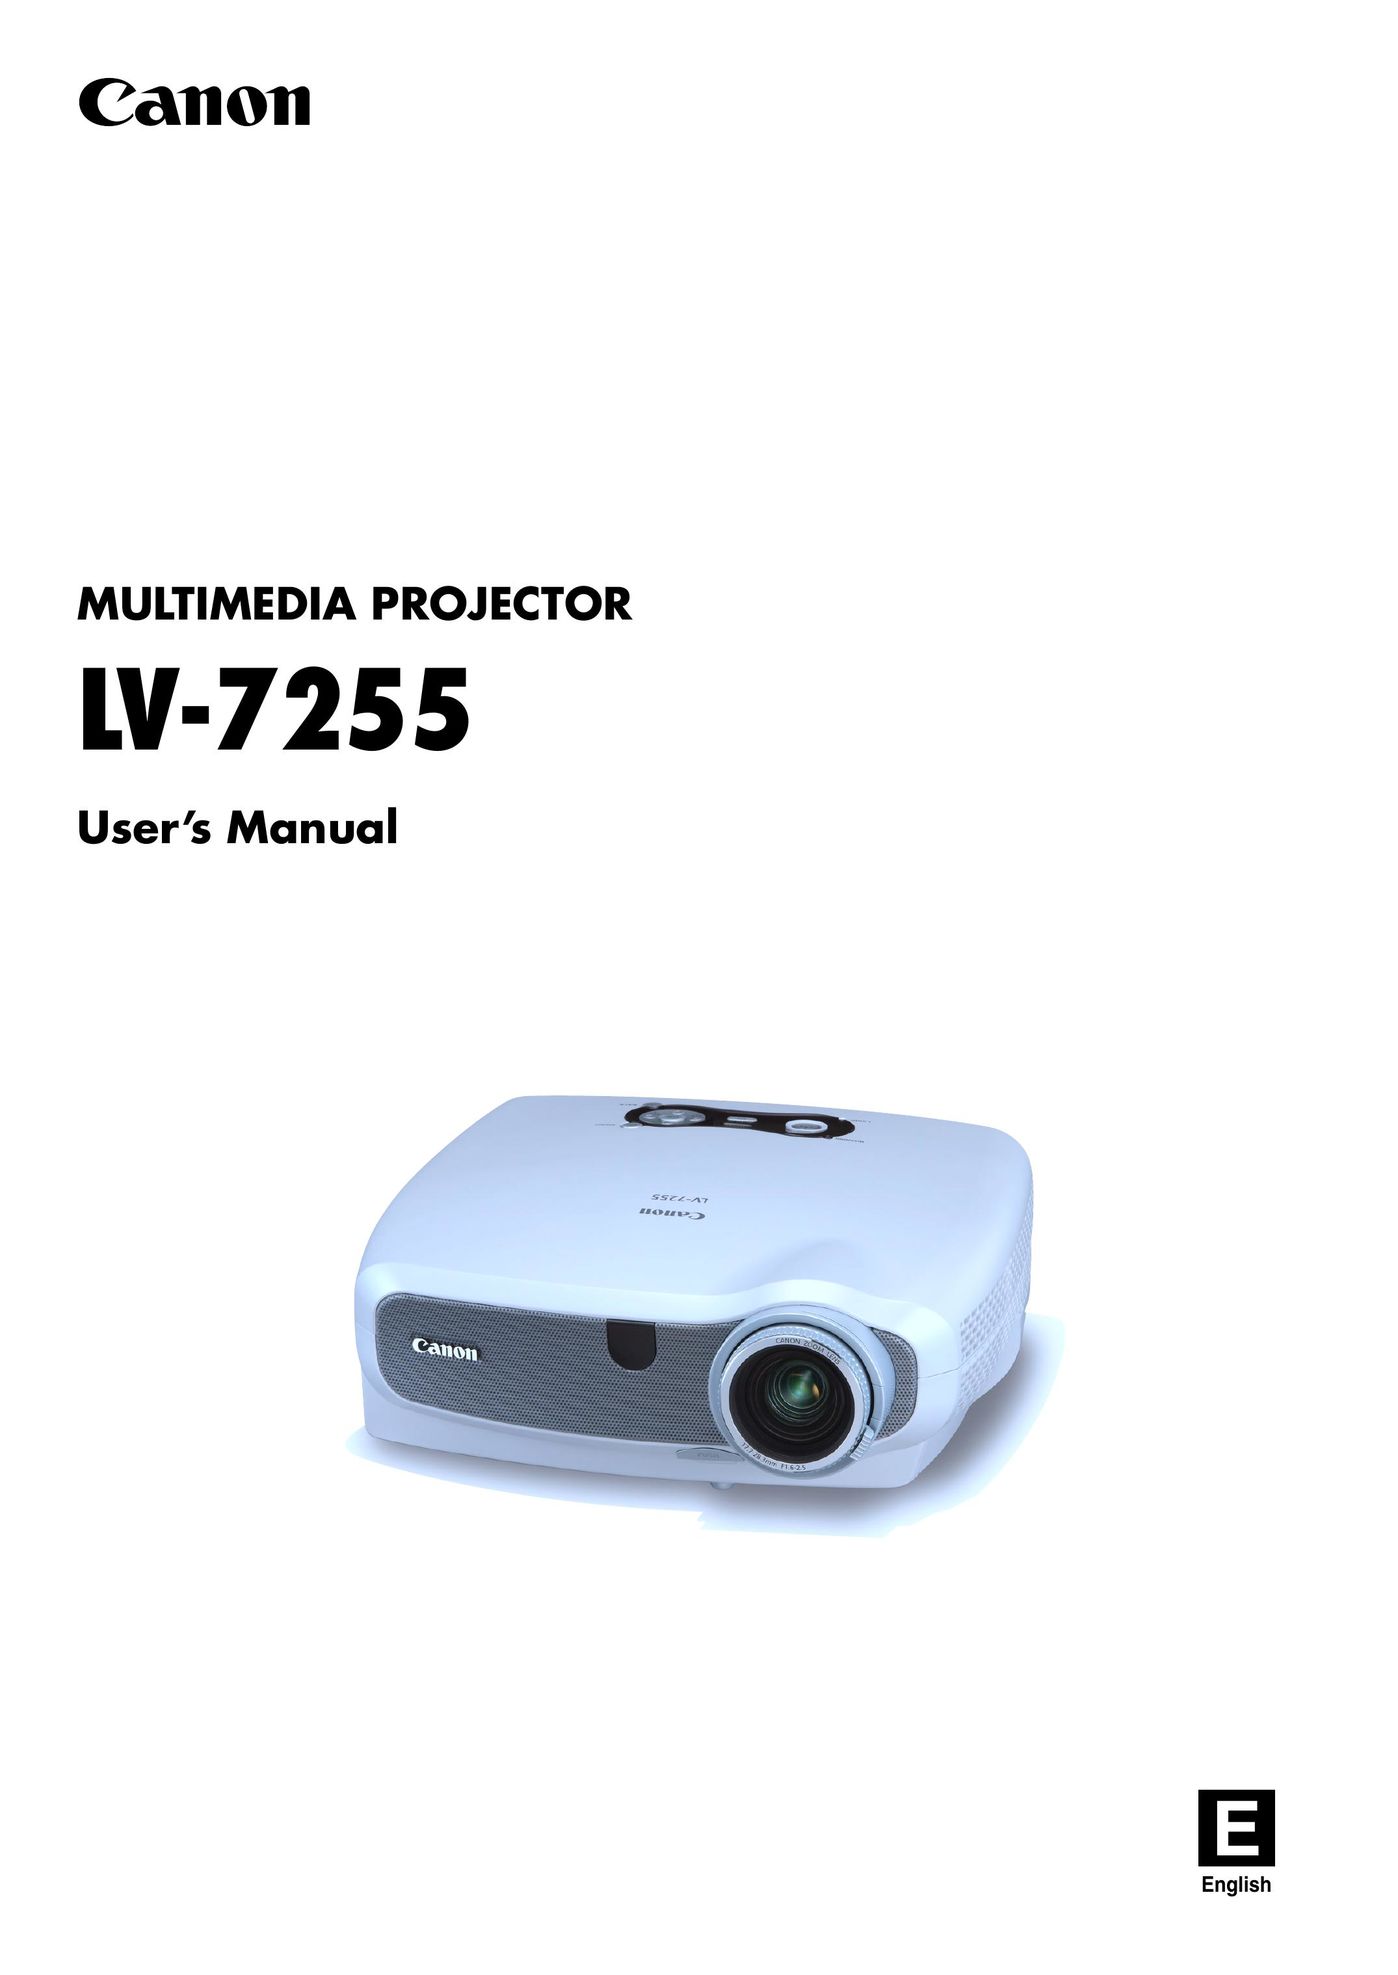 Canon LV-7255 Projector User Manual